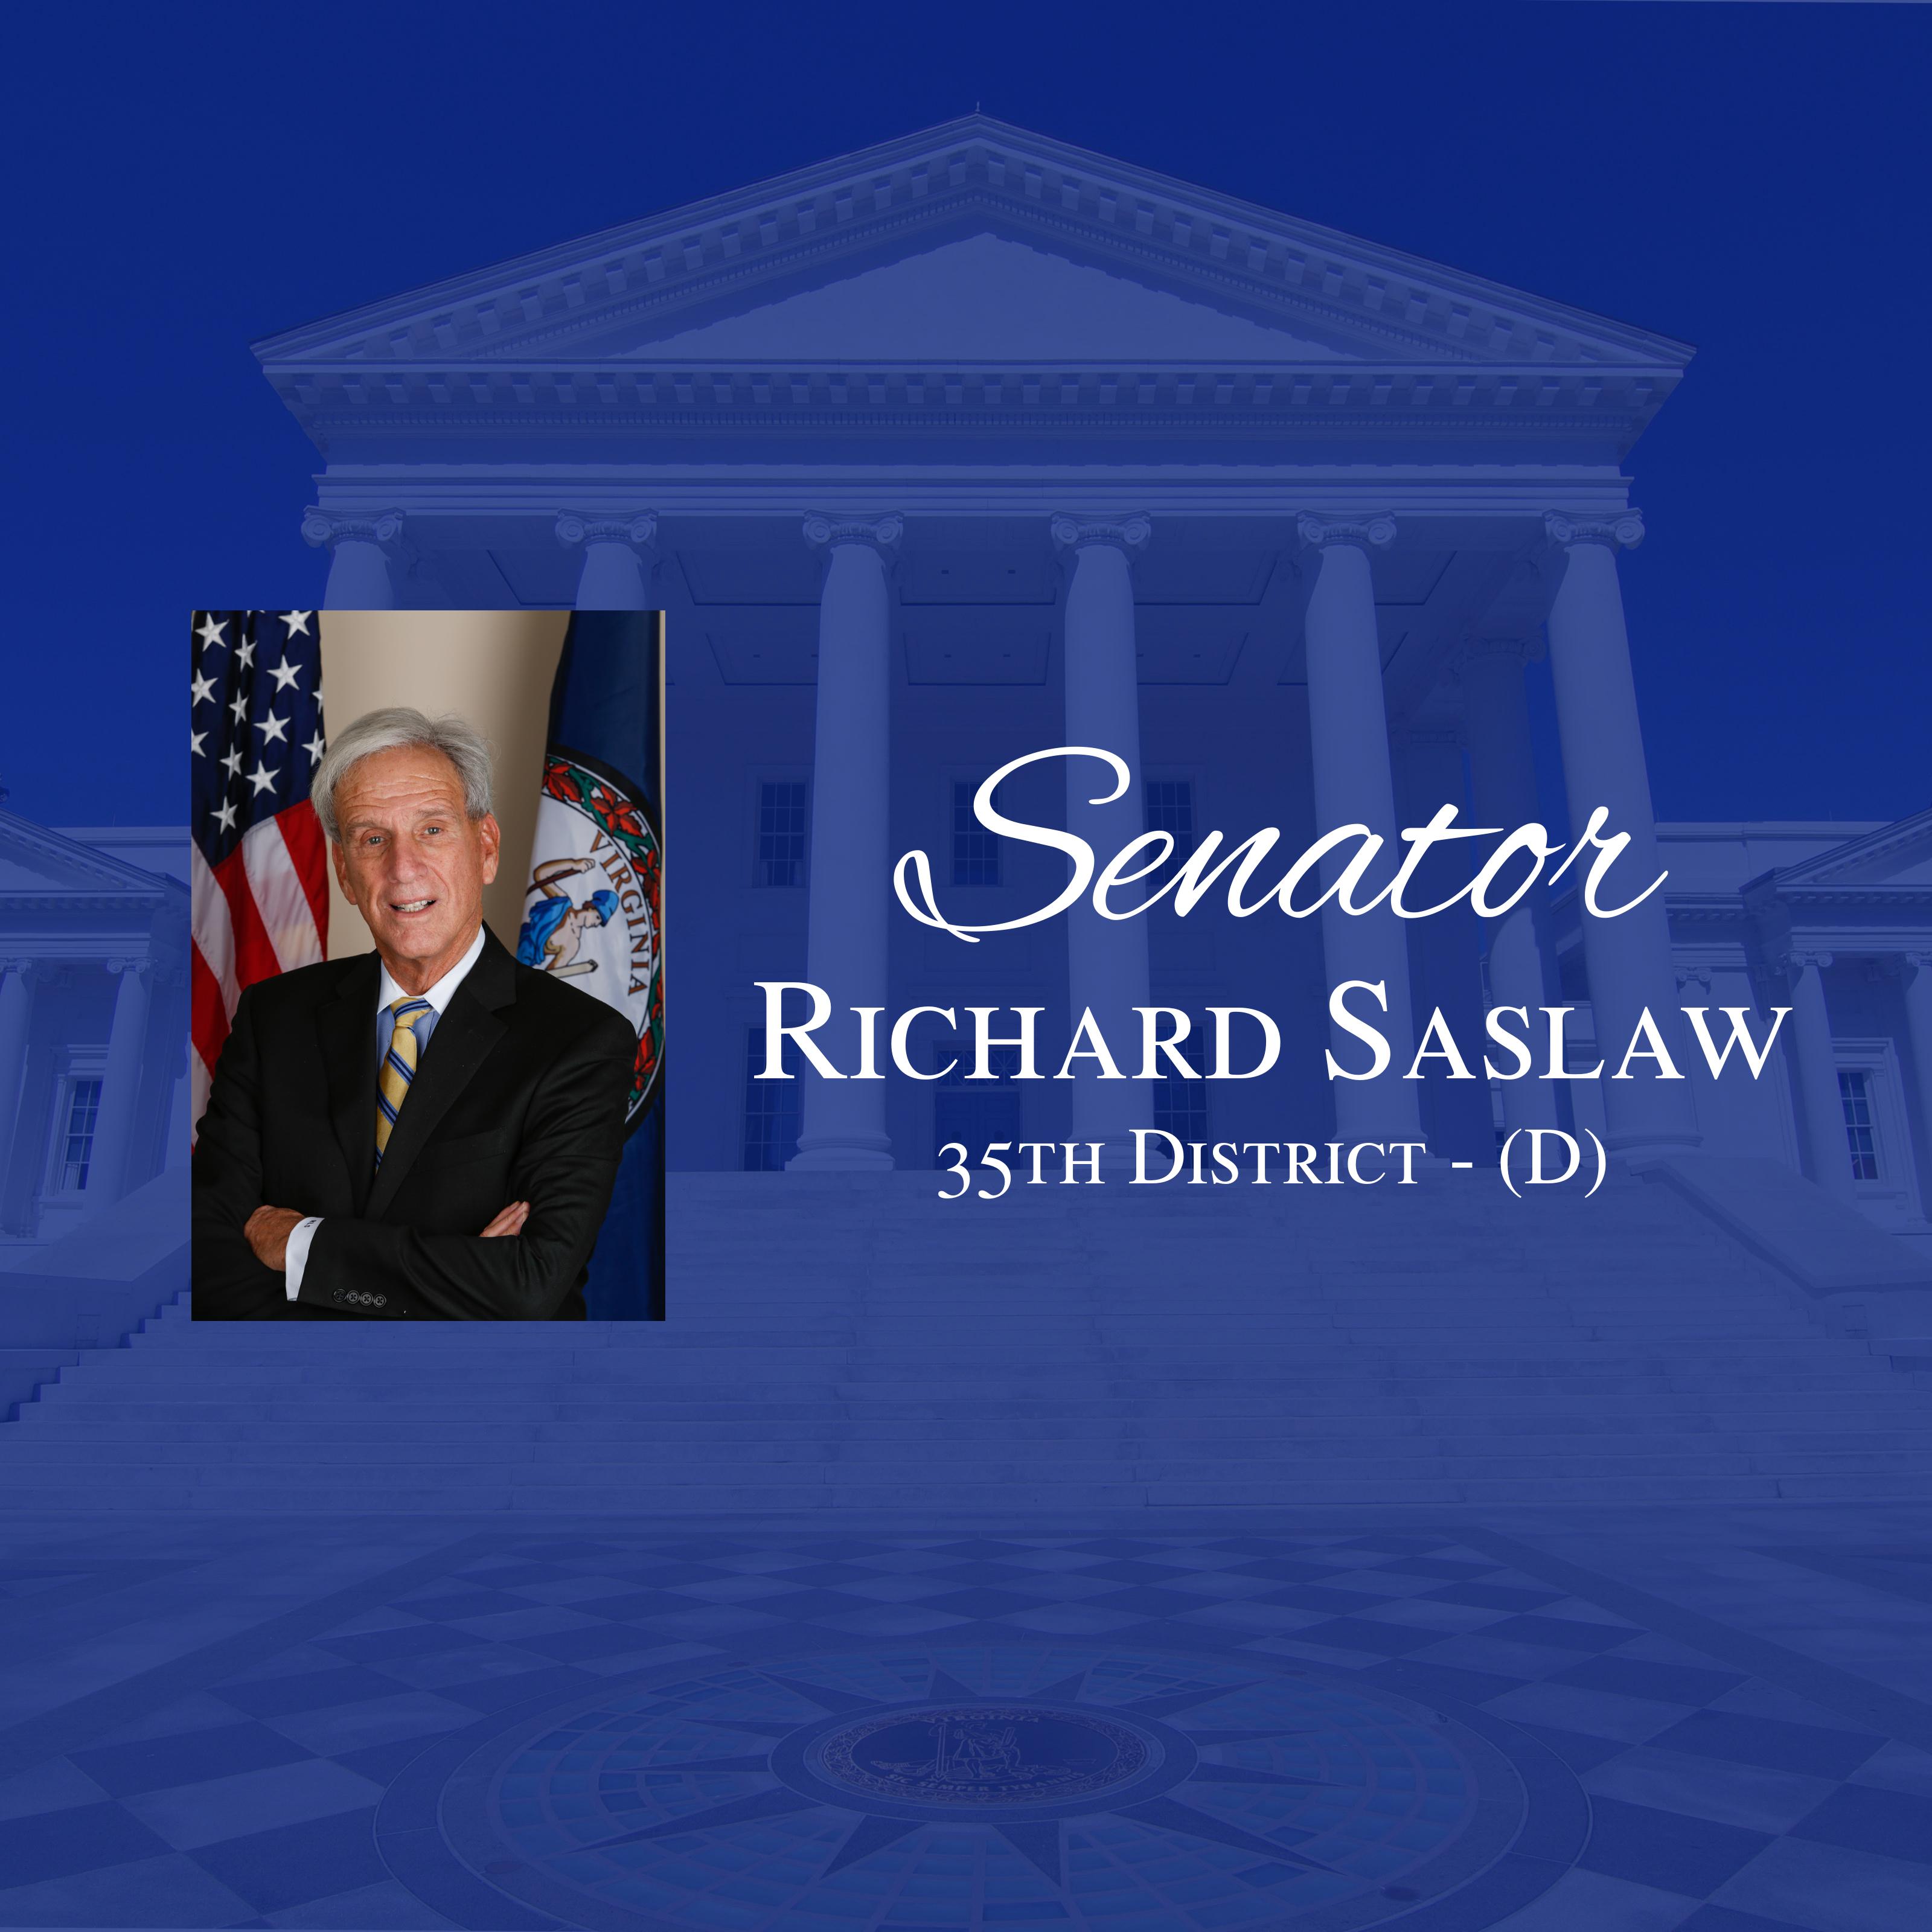 Saslaw, Richard, Majority Leader: HOD 1976-1980: SOV 1980-